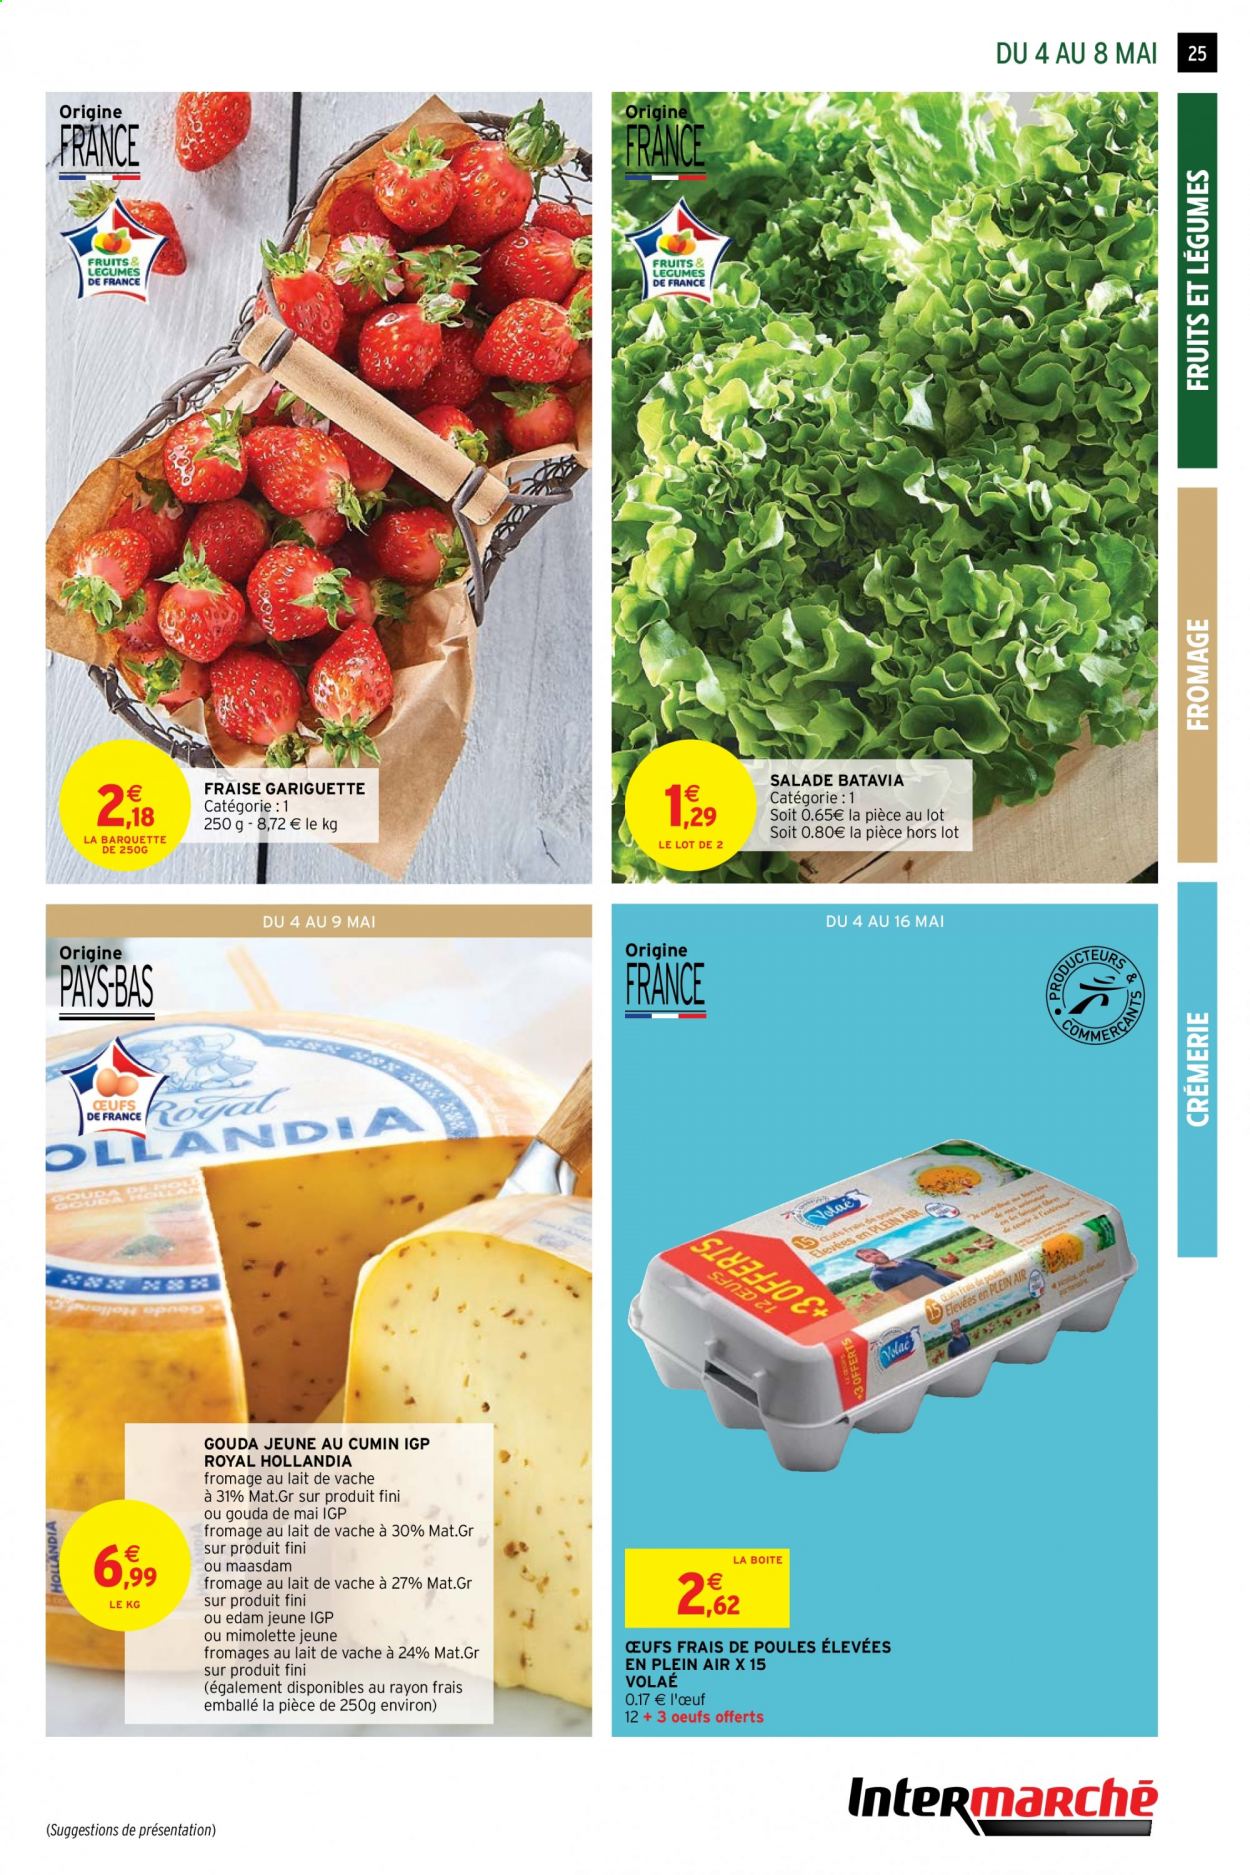 thumbnail - Catalogue Intermarché Contact - 04/05/2021 - 16/05/2021 - Produits soldés - salade, salade batavia, fromage, Mimolette, œufs. Page 25.